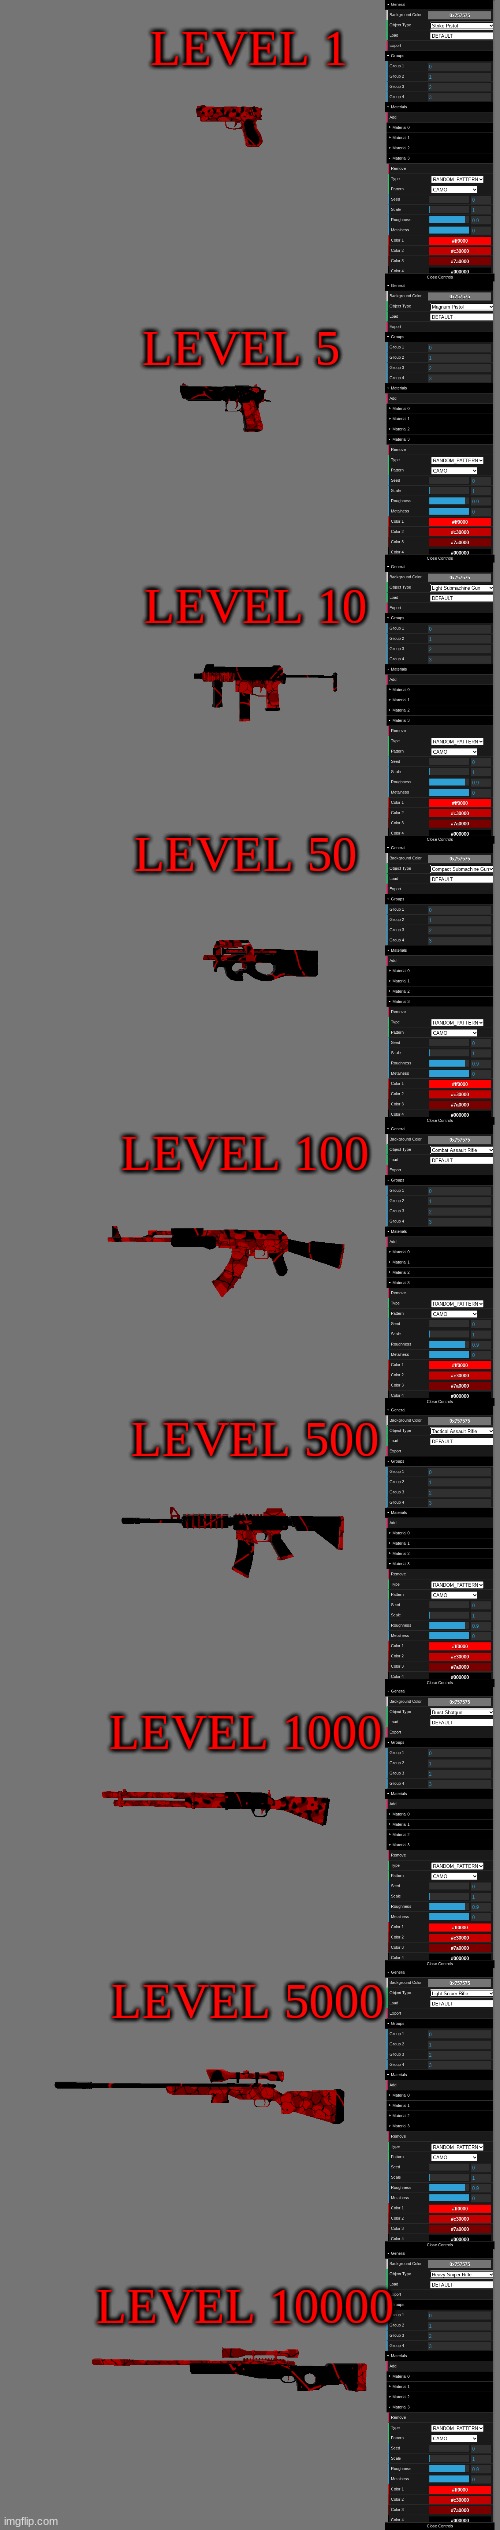 Gun levels | LEVEL 1; LEVEL 5; LEVEL 10; LEVEL 50; LEVEL 100; LEVEL 500; LEVEL 1000; LEVEL 5000; LEVEL 10000 | image tagged in guns,level | made w/ Imgflip meme maker